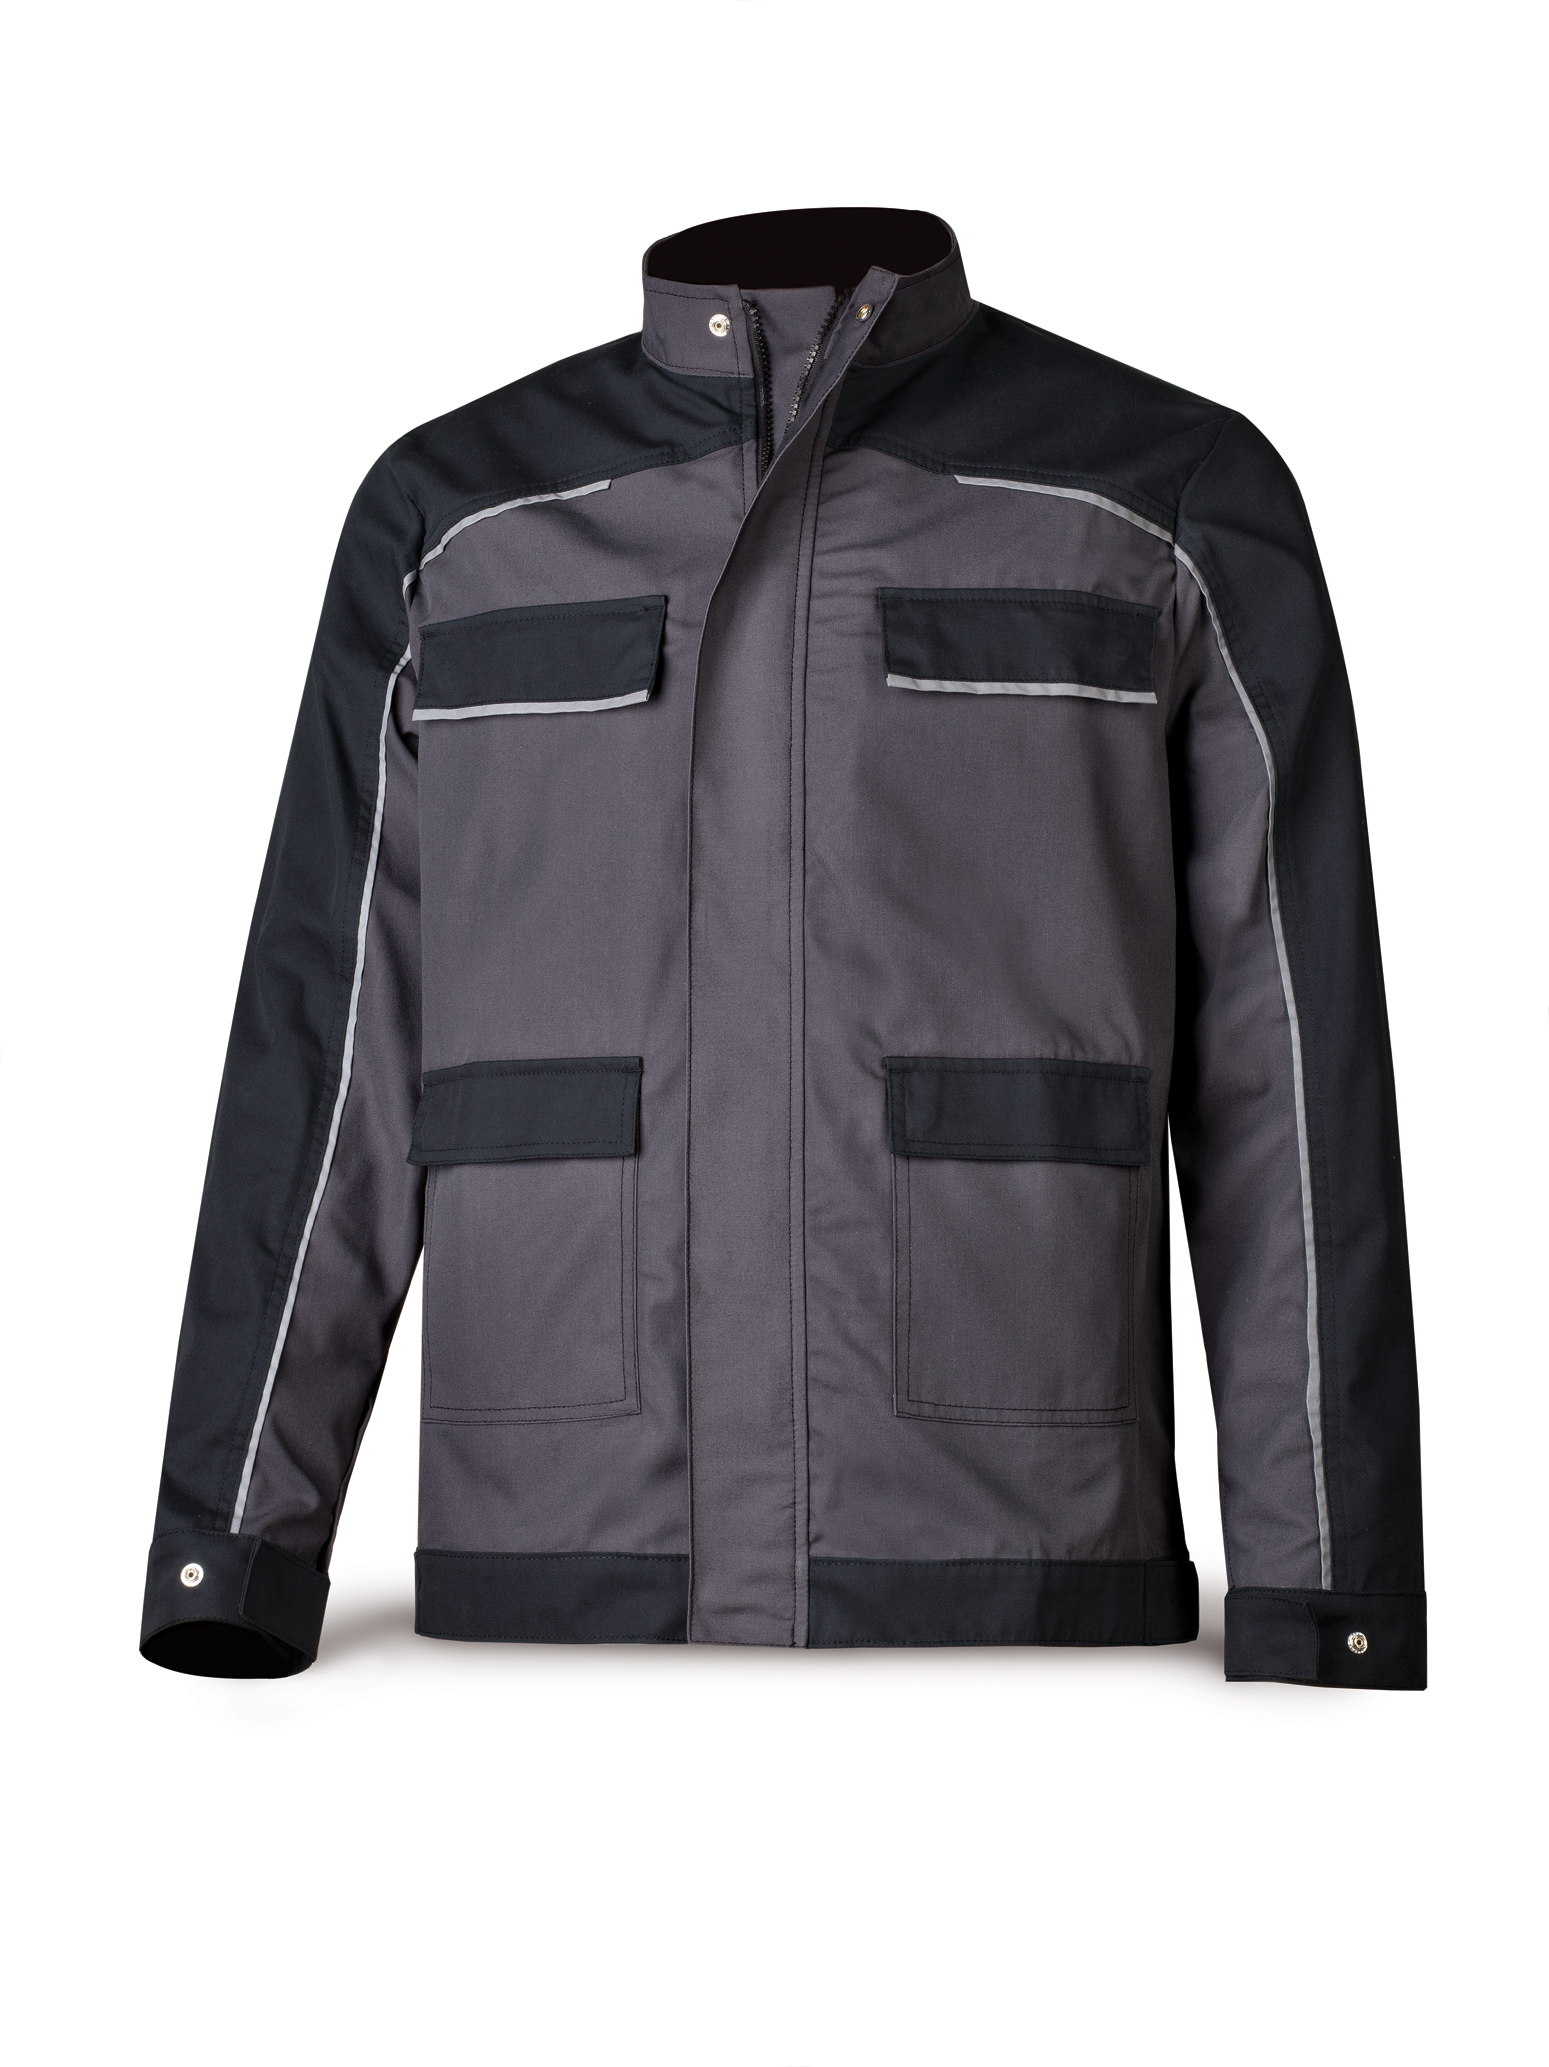 588-CNEG Workwear Pro Series 245 gr. Canvas tergal jacket. Grey/Black.